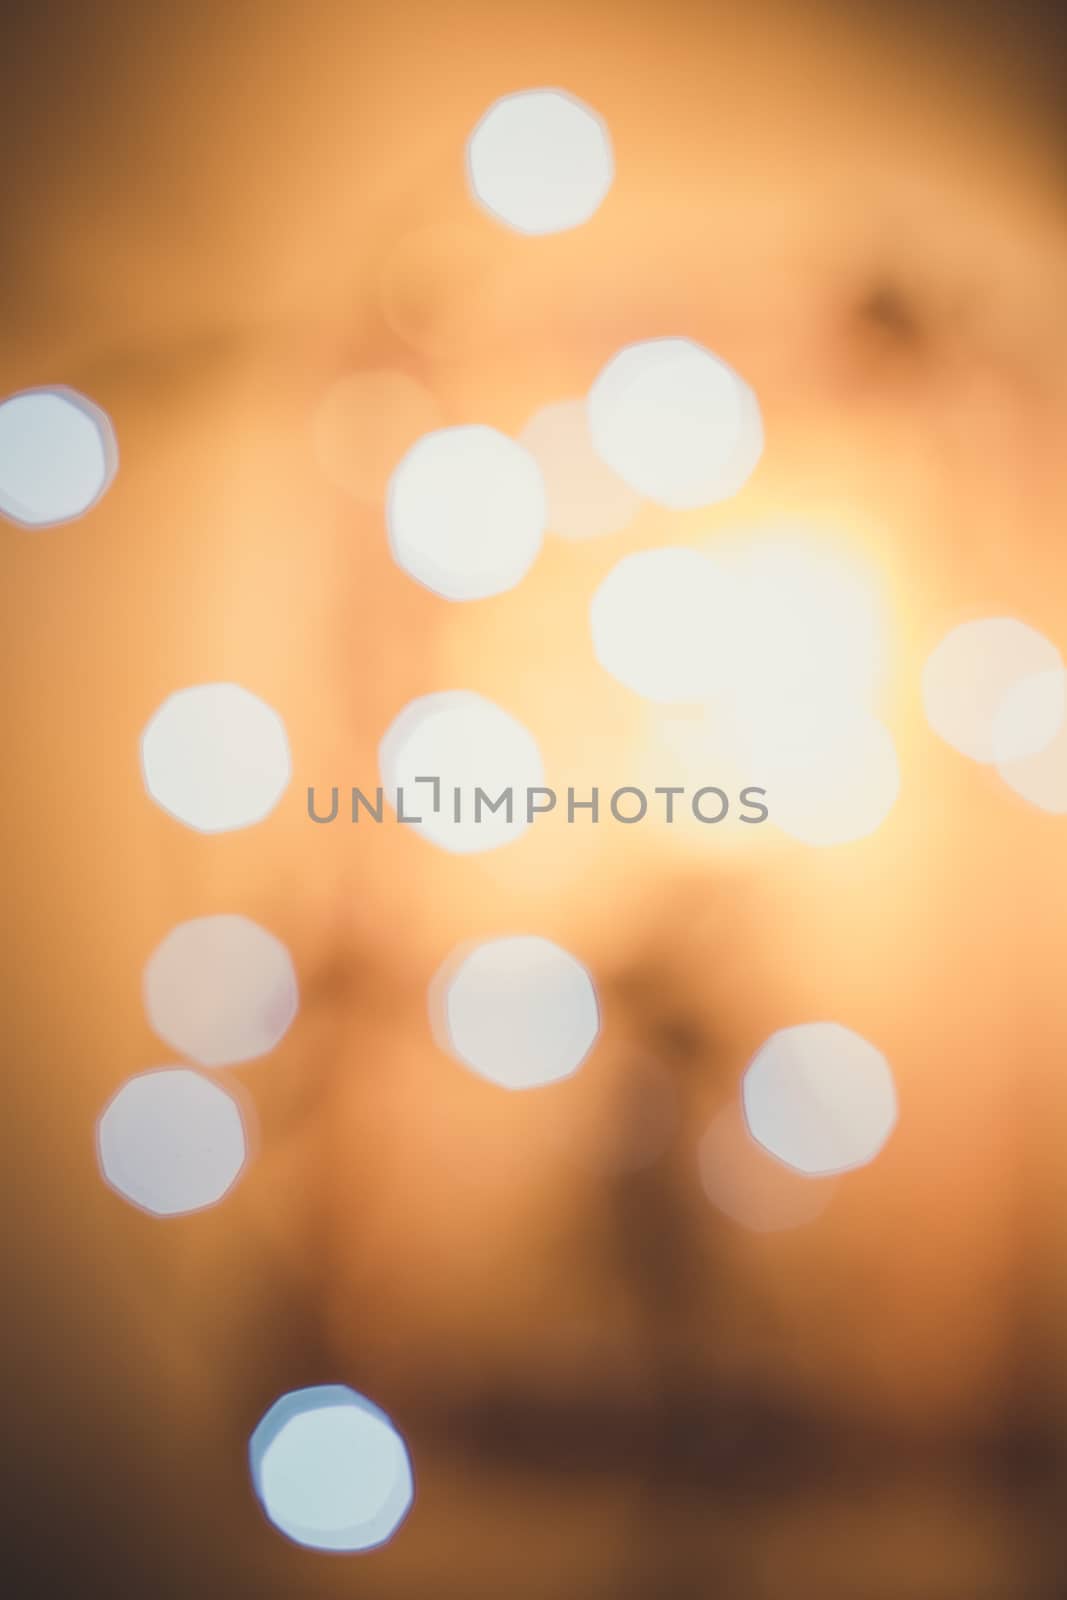 Bokeh lights. Beautiful Christmas background.